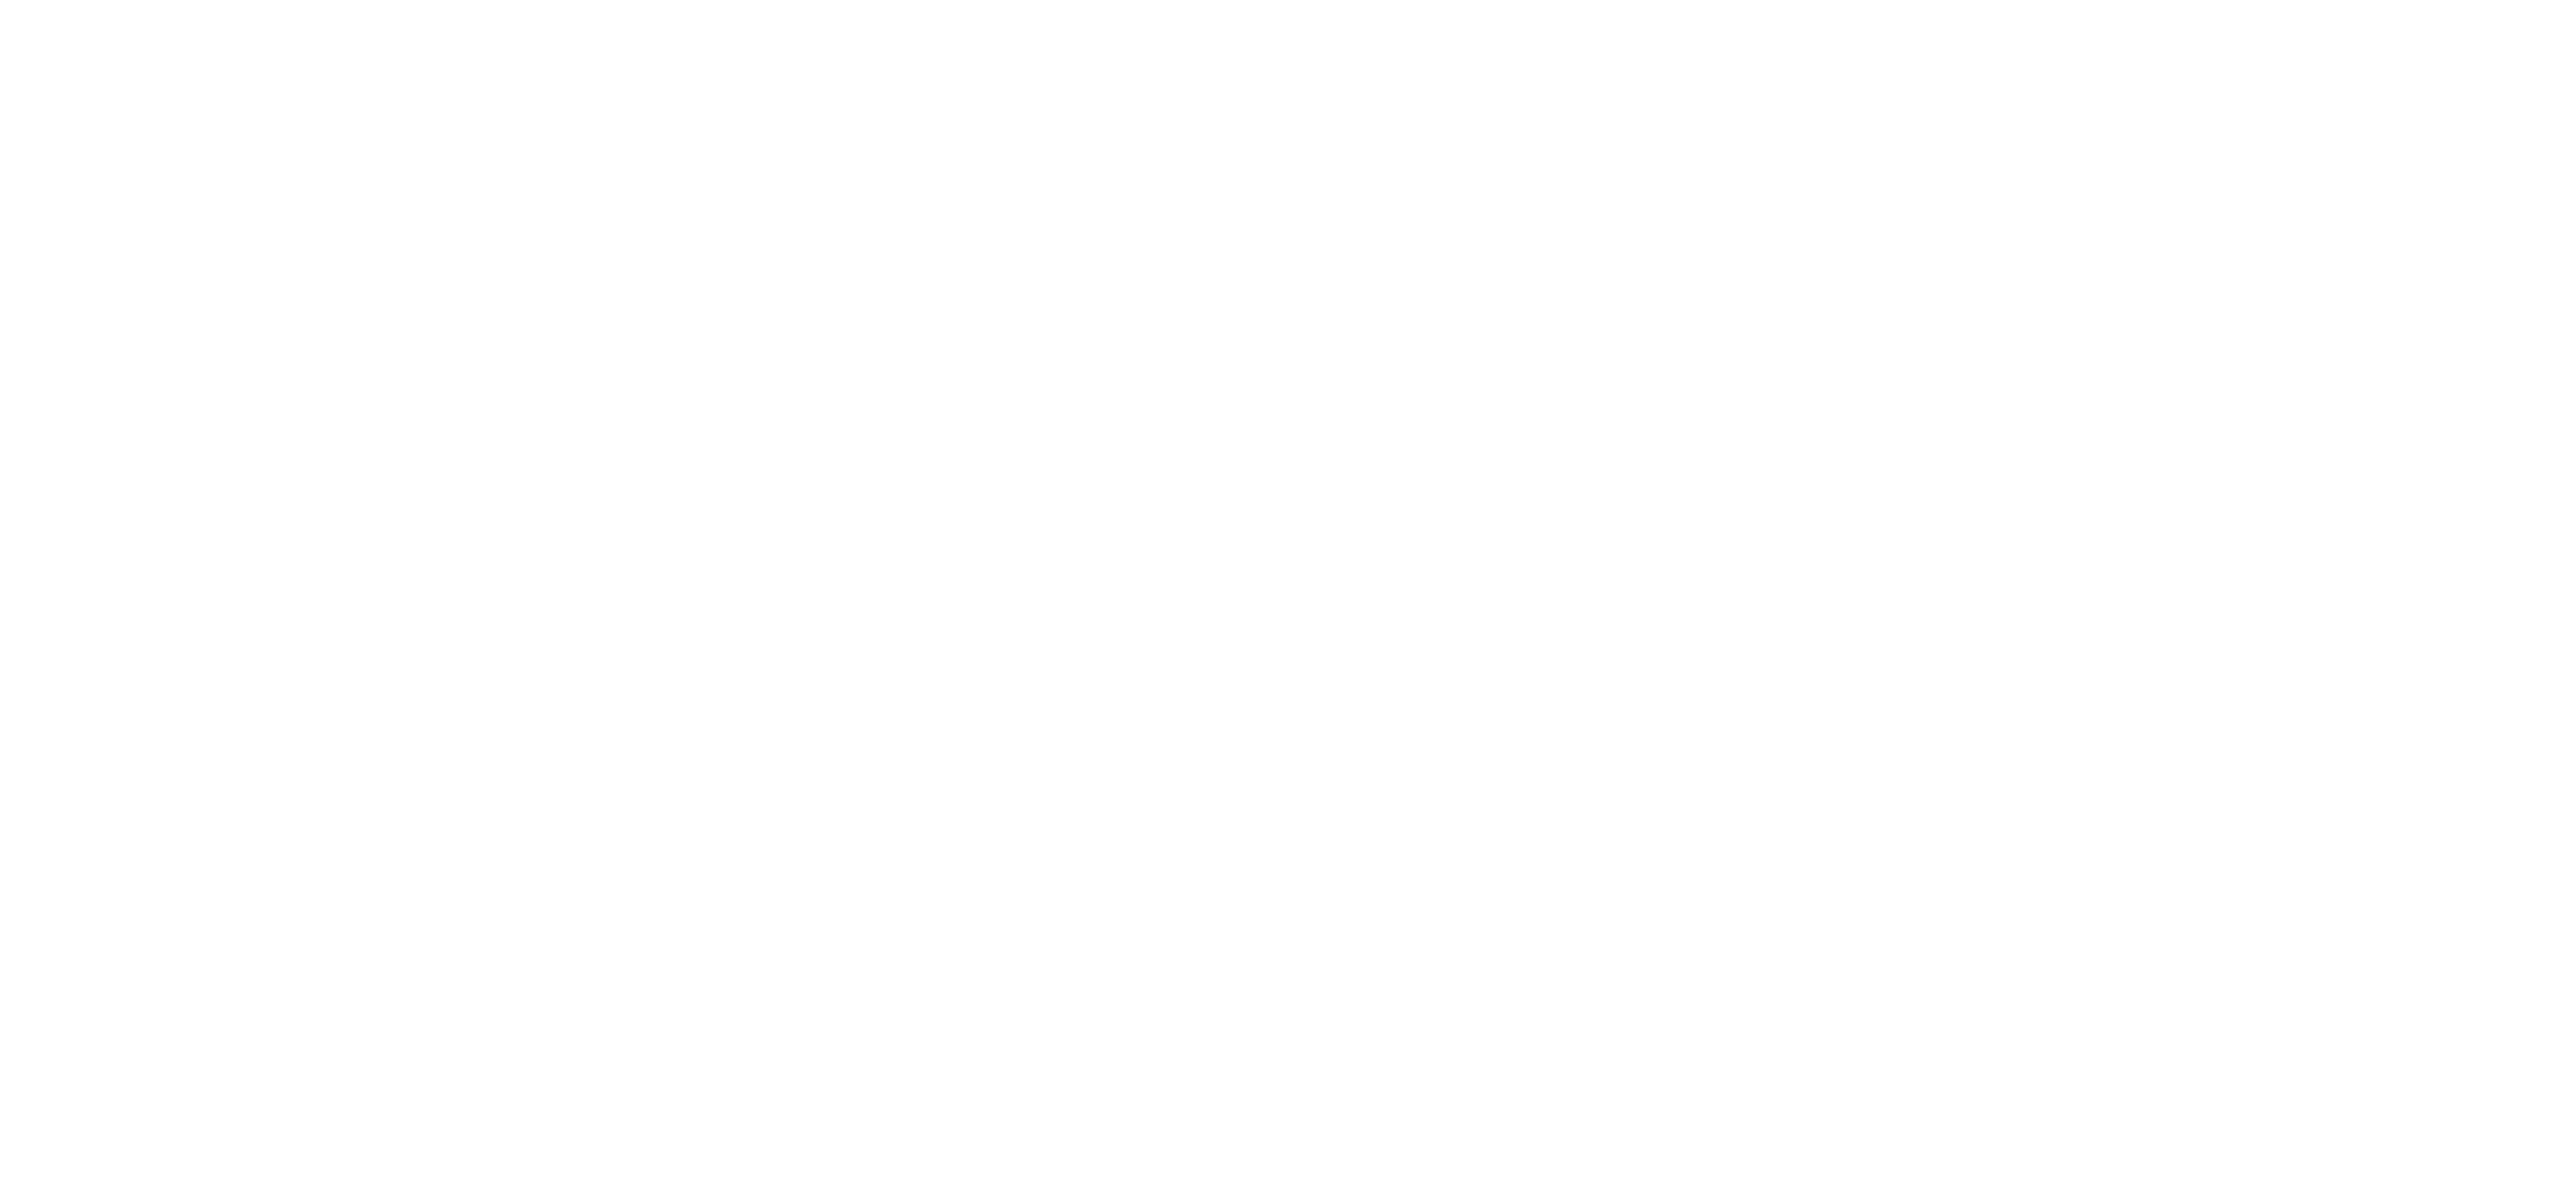 MatchMaker Mysteries: A Killer Engagement logo